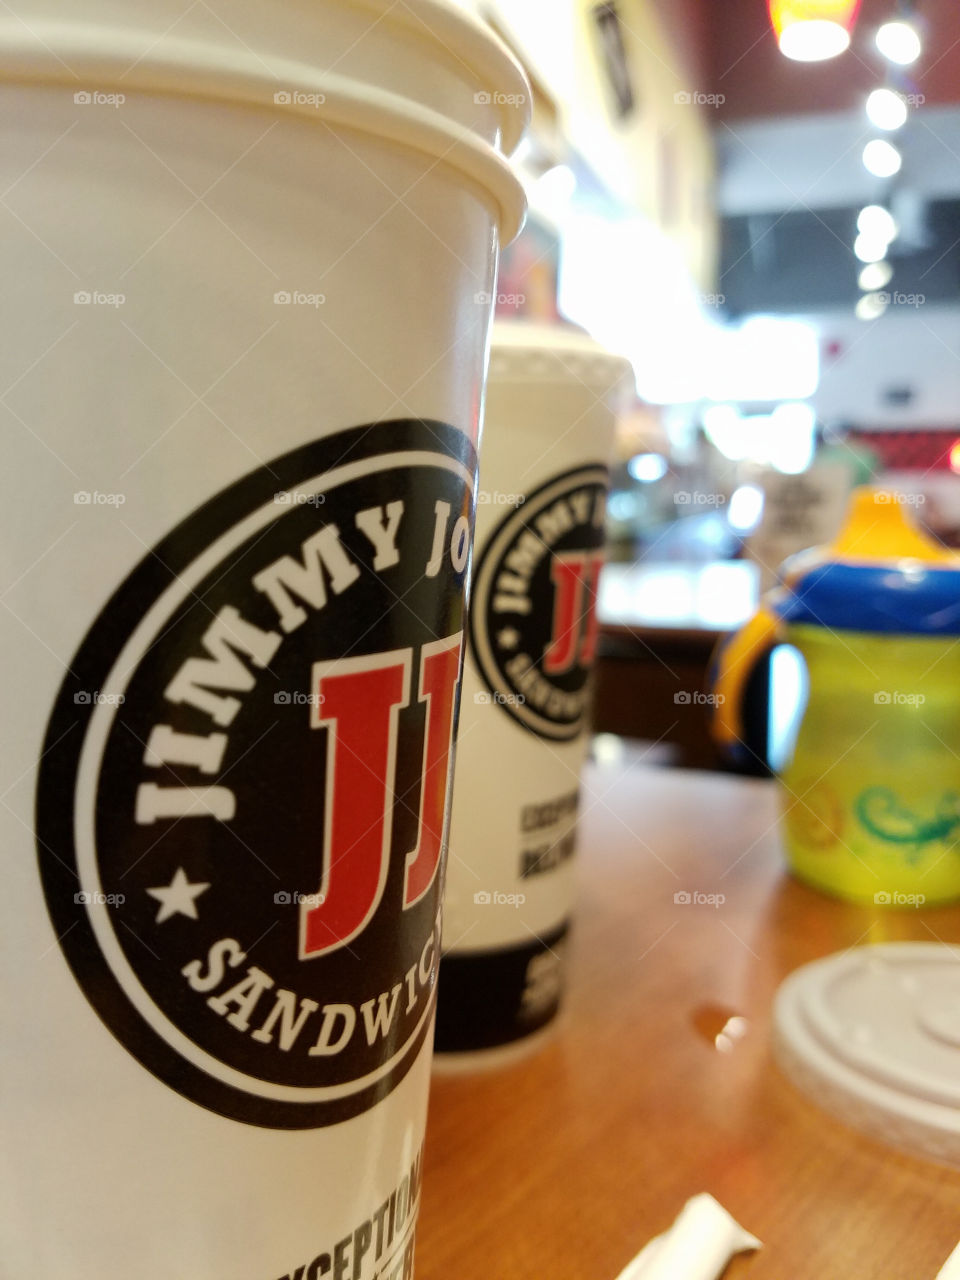 Jimmy John's cup